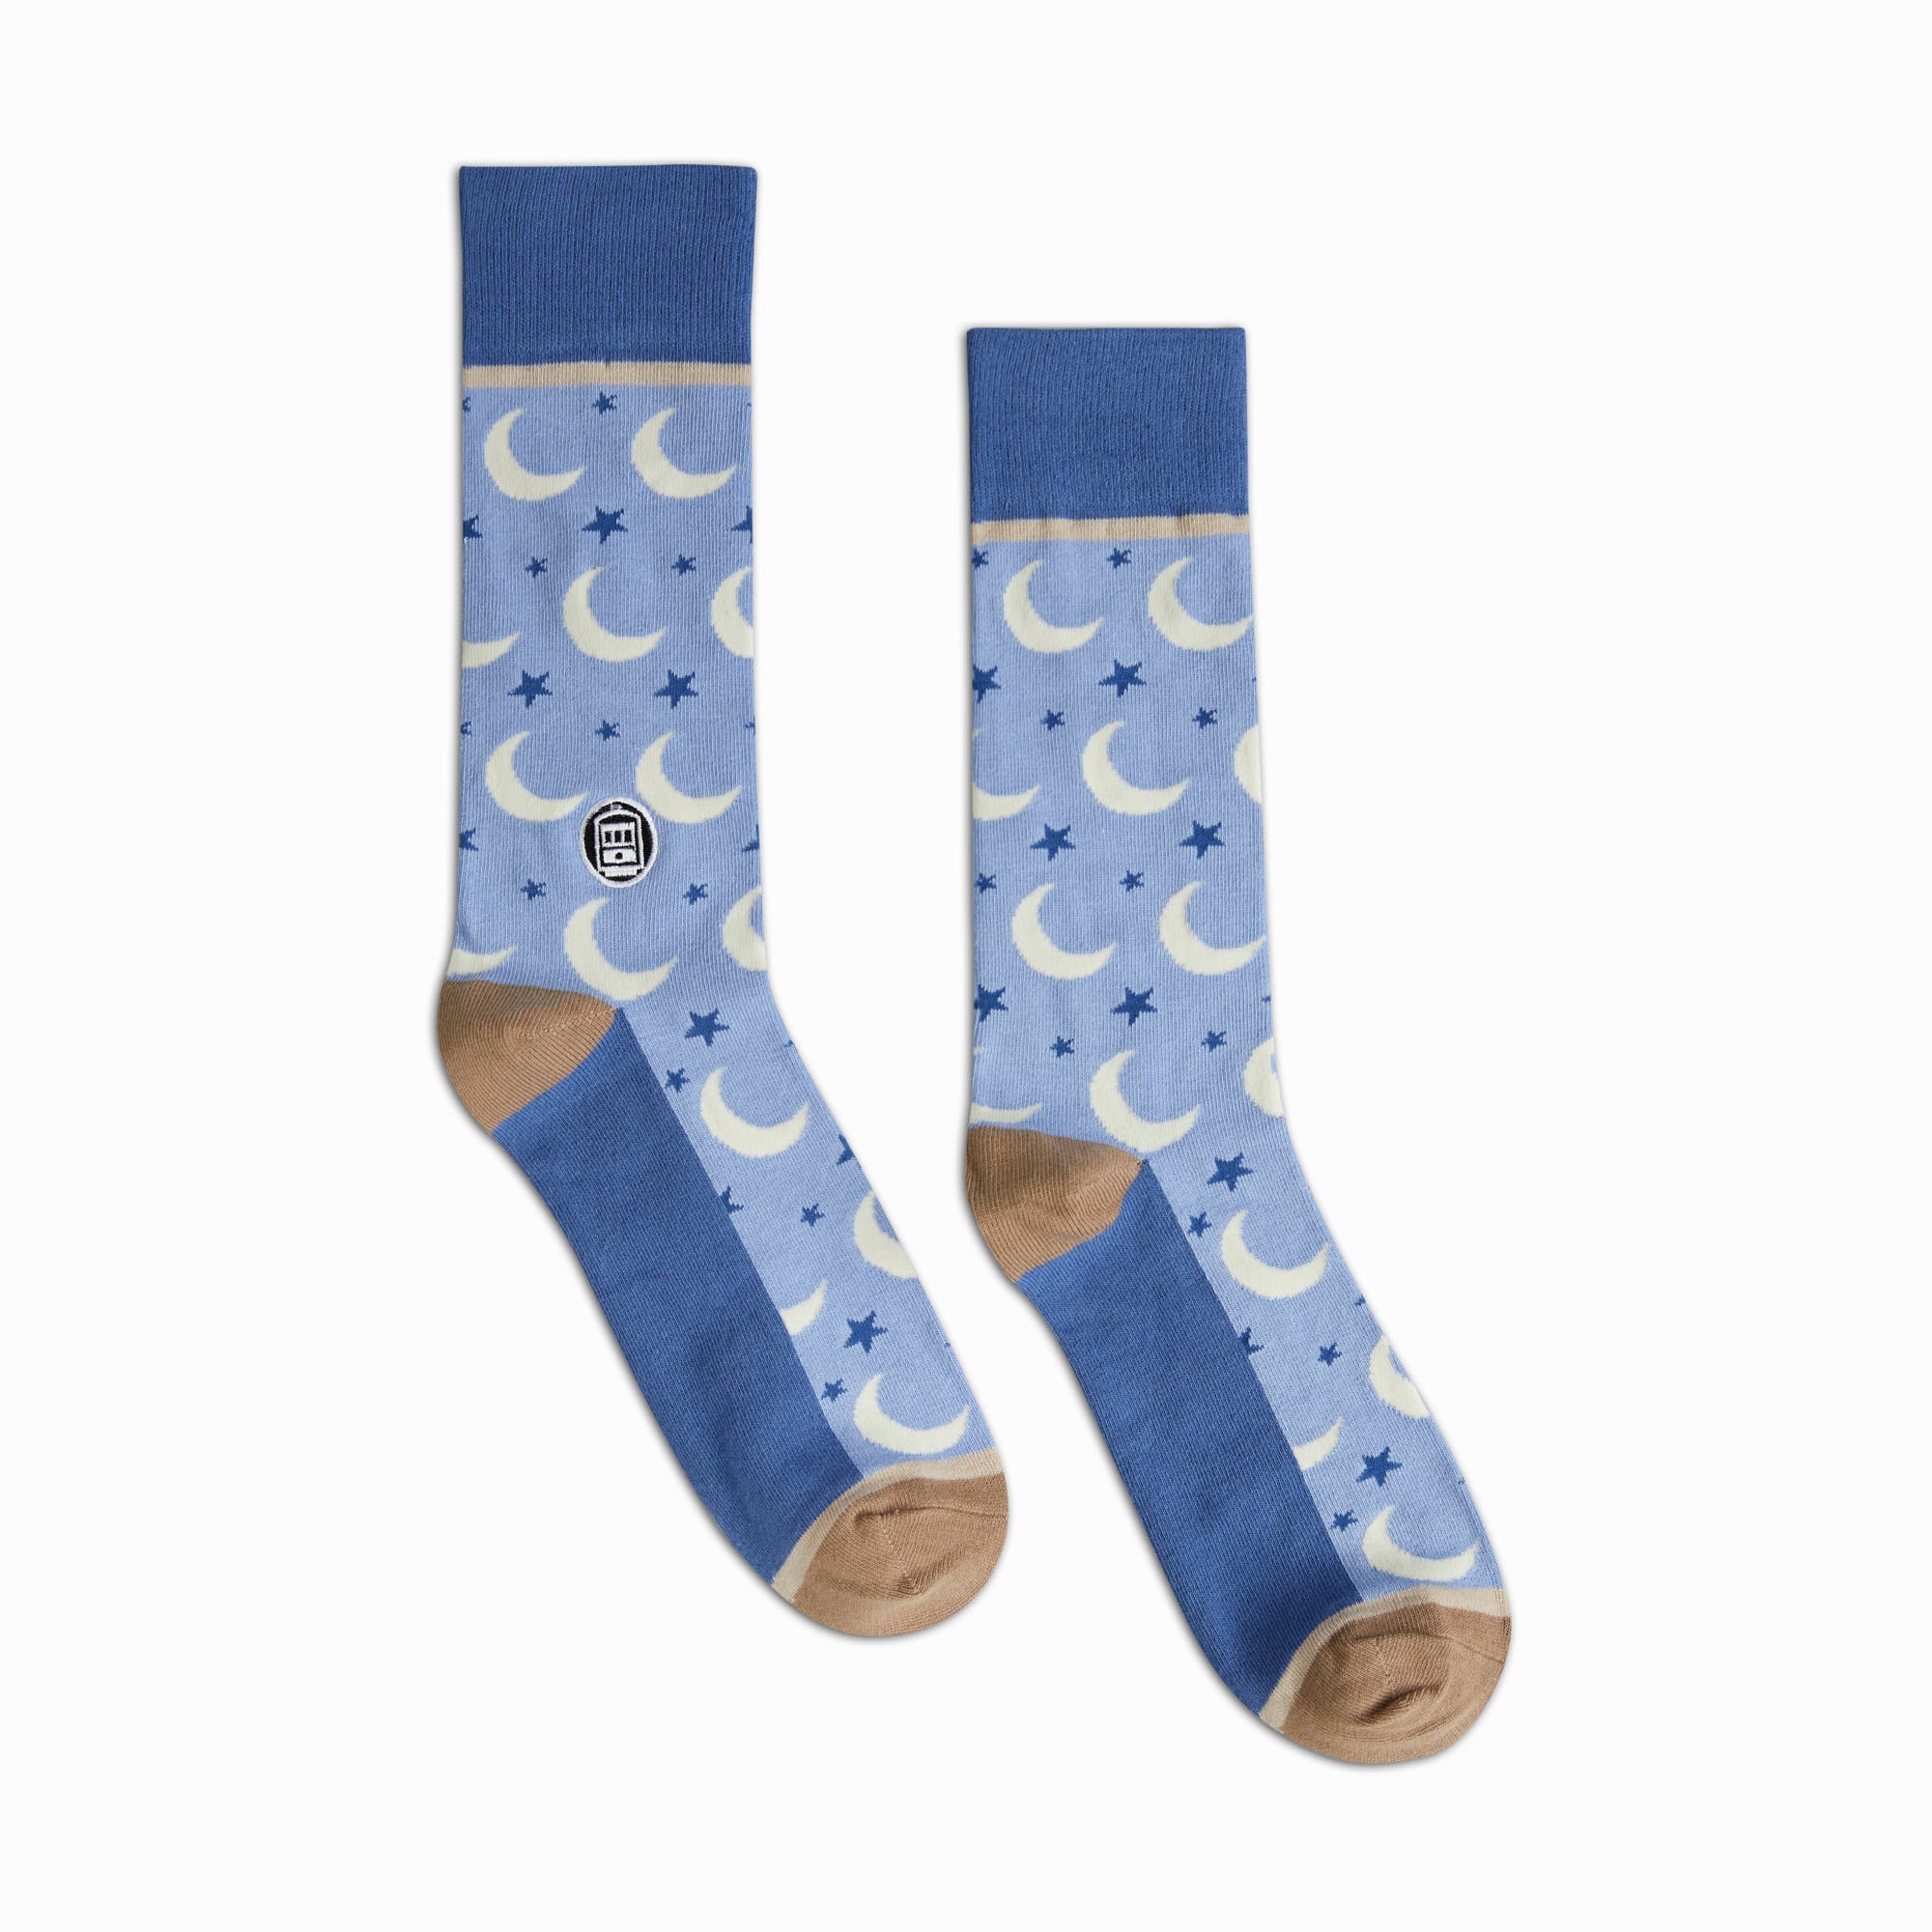 Bonfolk Crescent Moon Socks